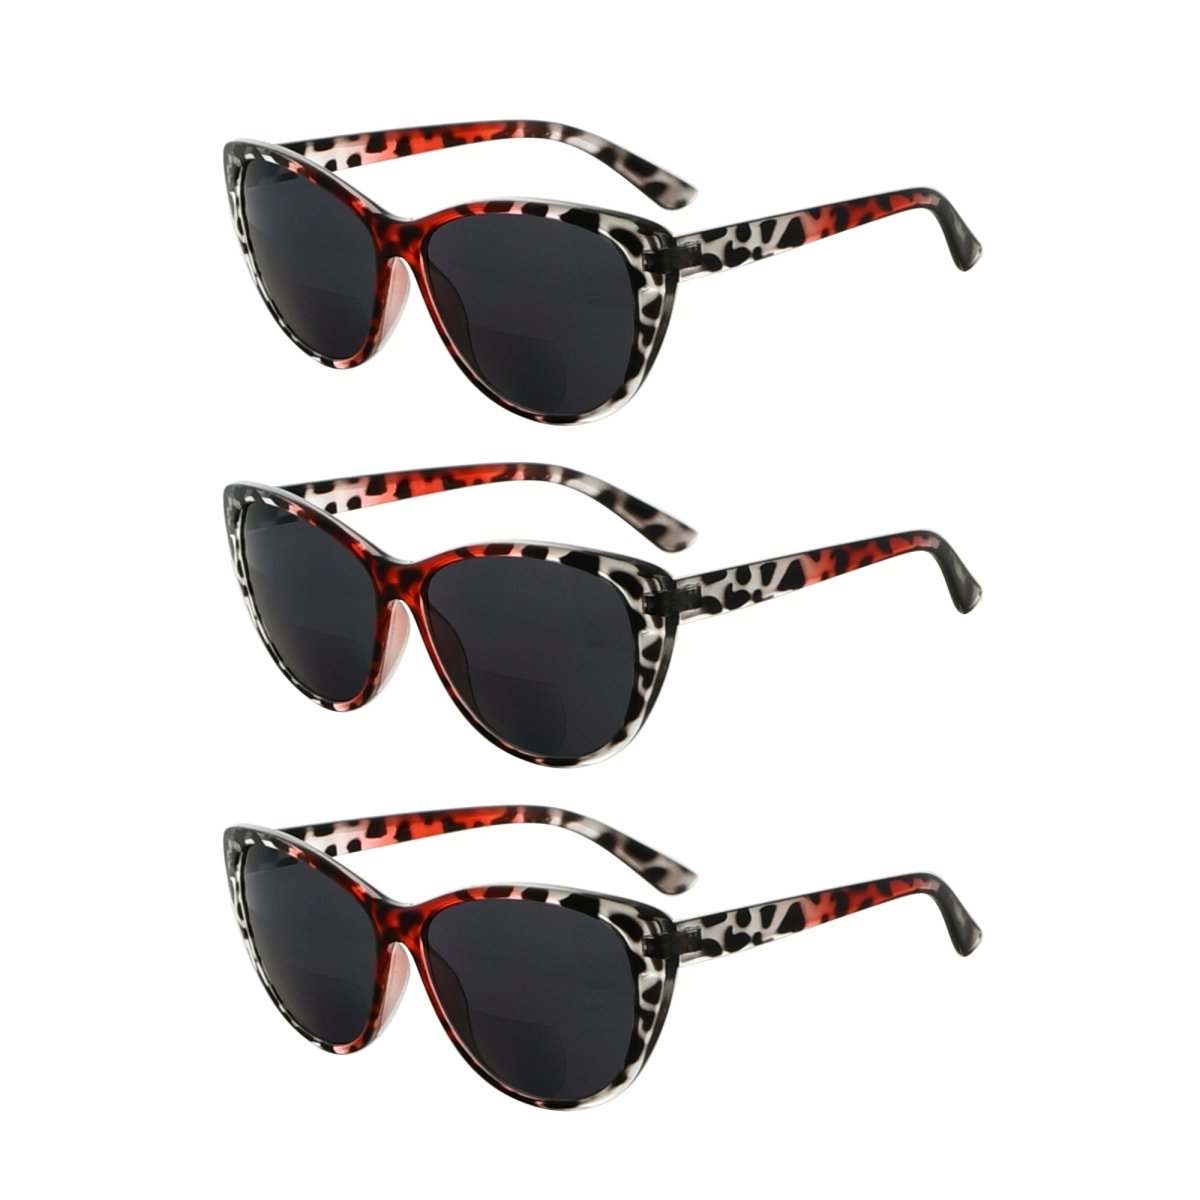 3 Pack Cat-eye Stylish Bifocal Reading Sunglasses Women S033eyekeeper.com